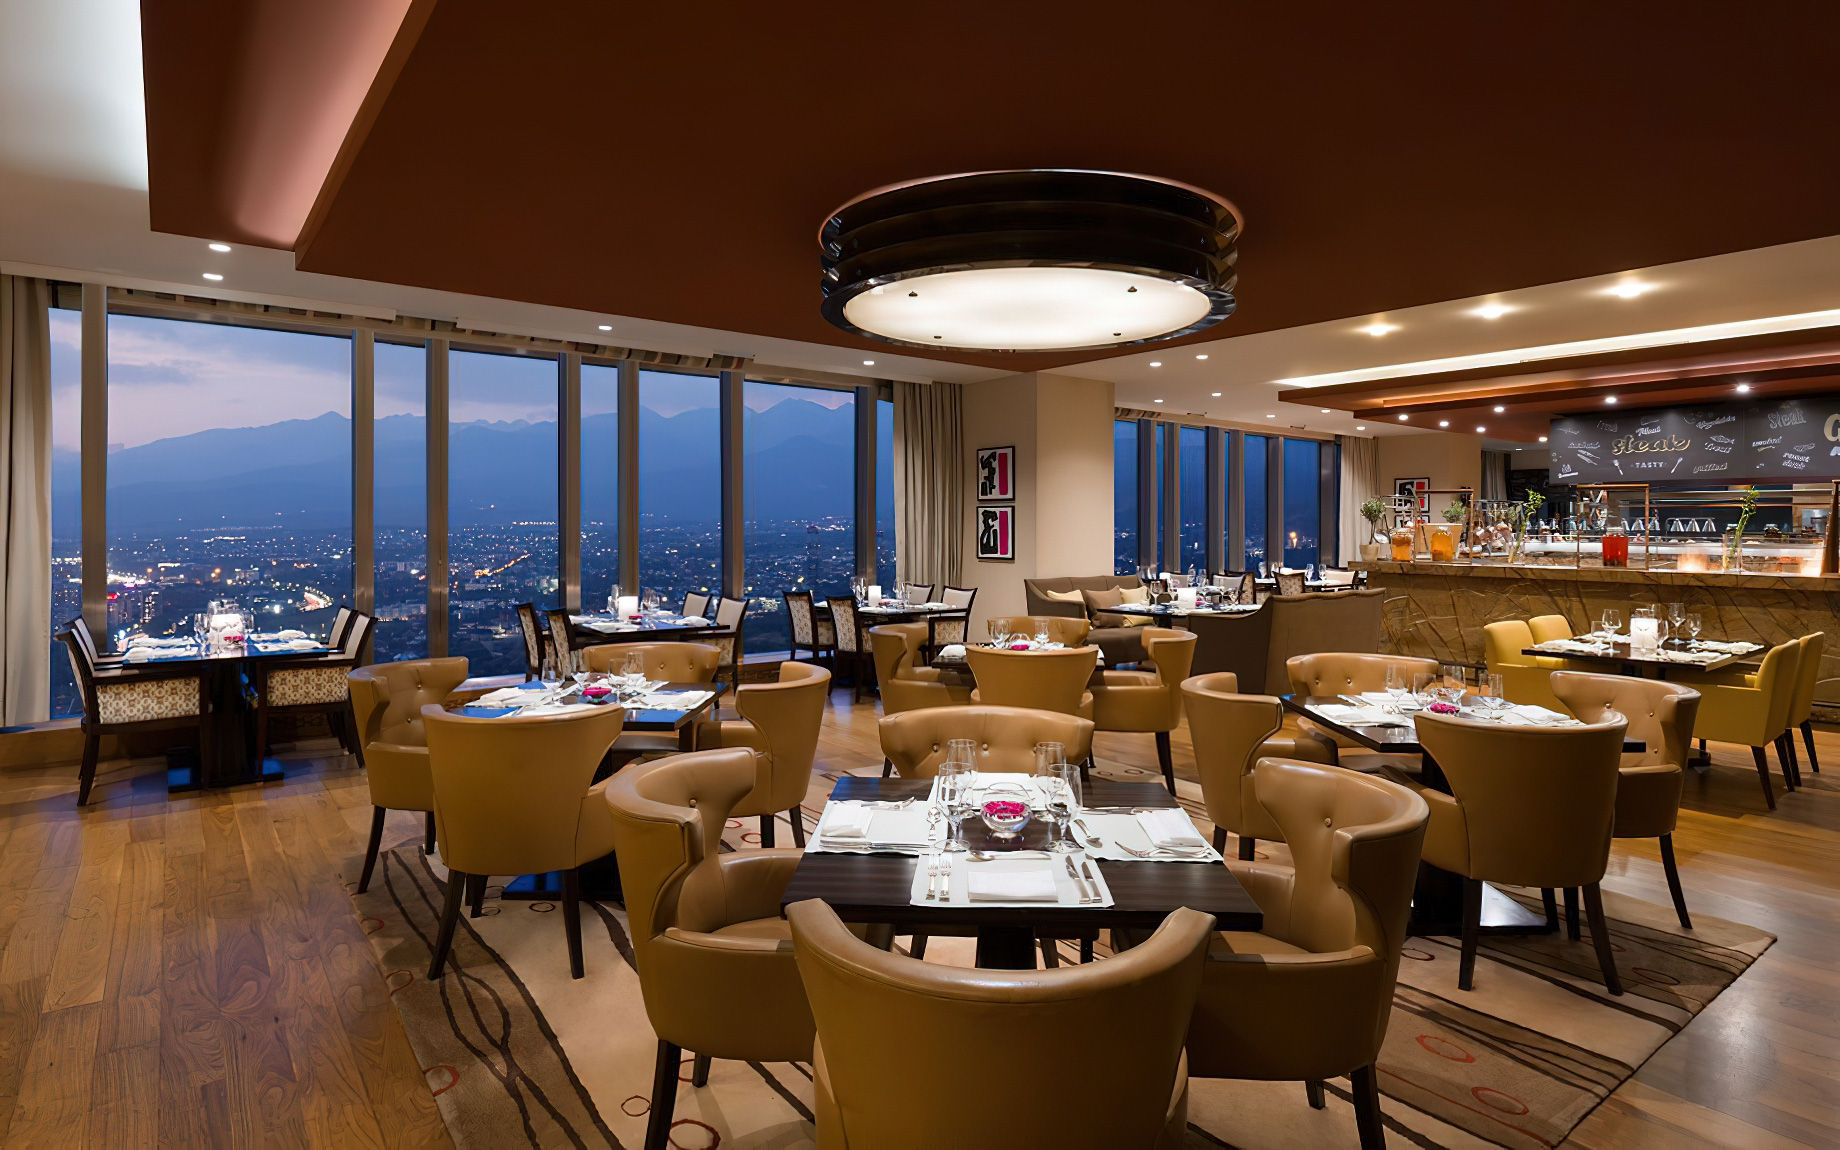 The Ritz-Carlton, Almaty Hotel – Almaty, Kazakhstan – Vista Restaurant Seating